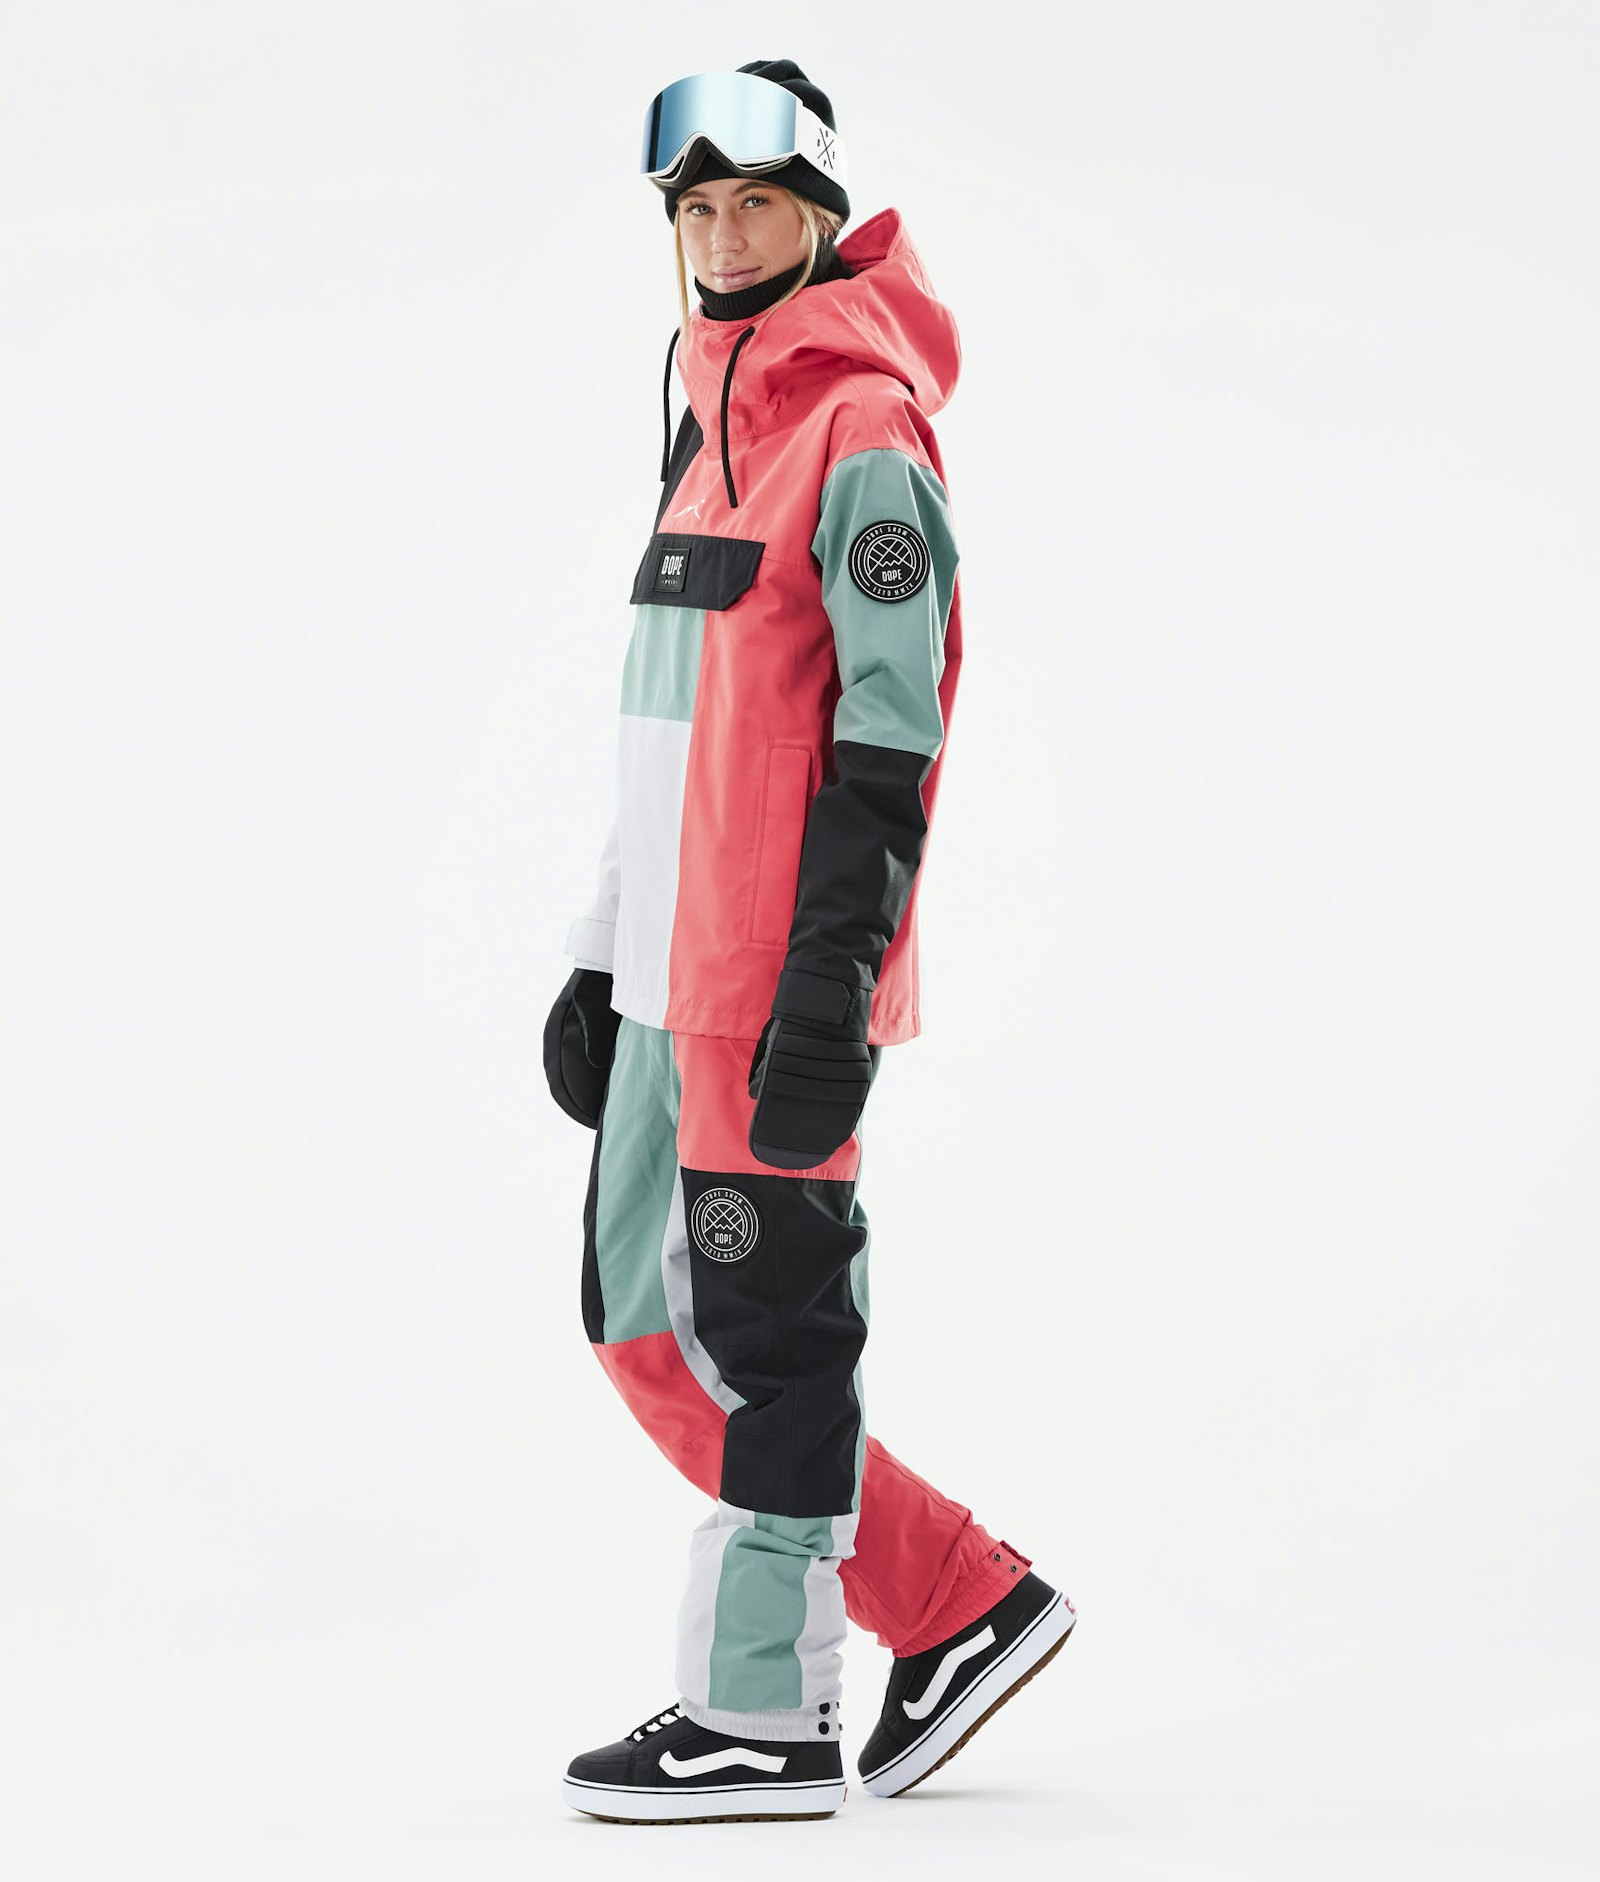 Dope Blizzard LE W Veste Snowboard Femme Limited Edition Patchwork Coral